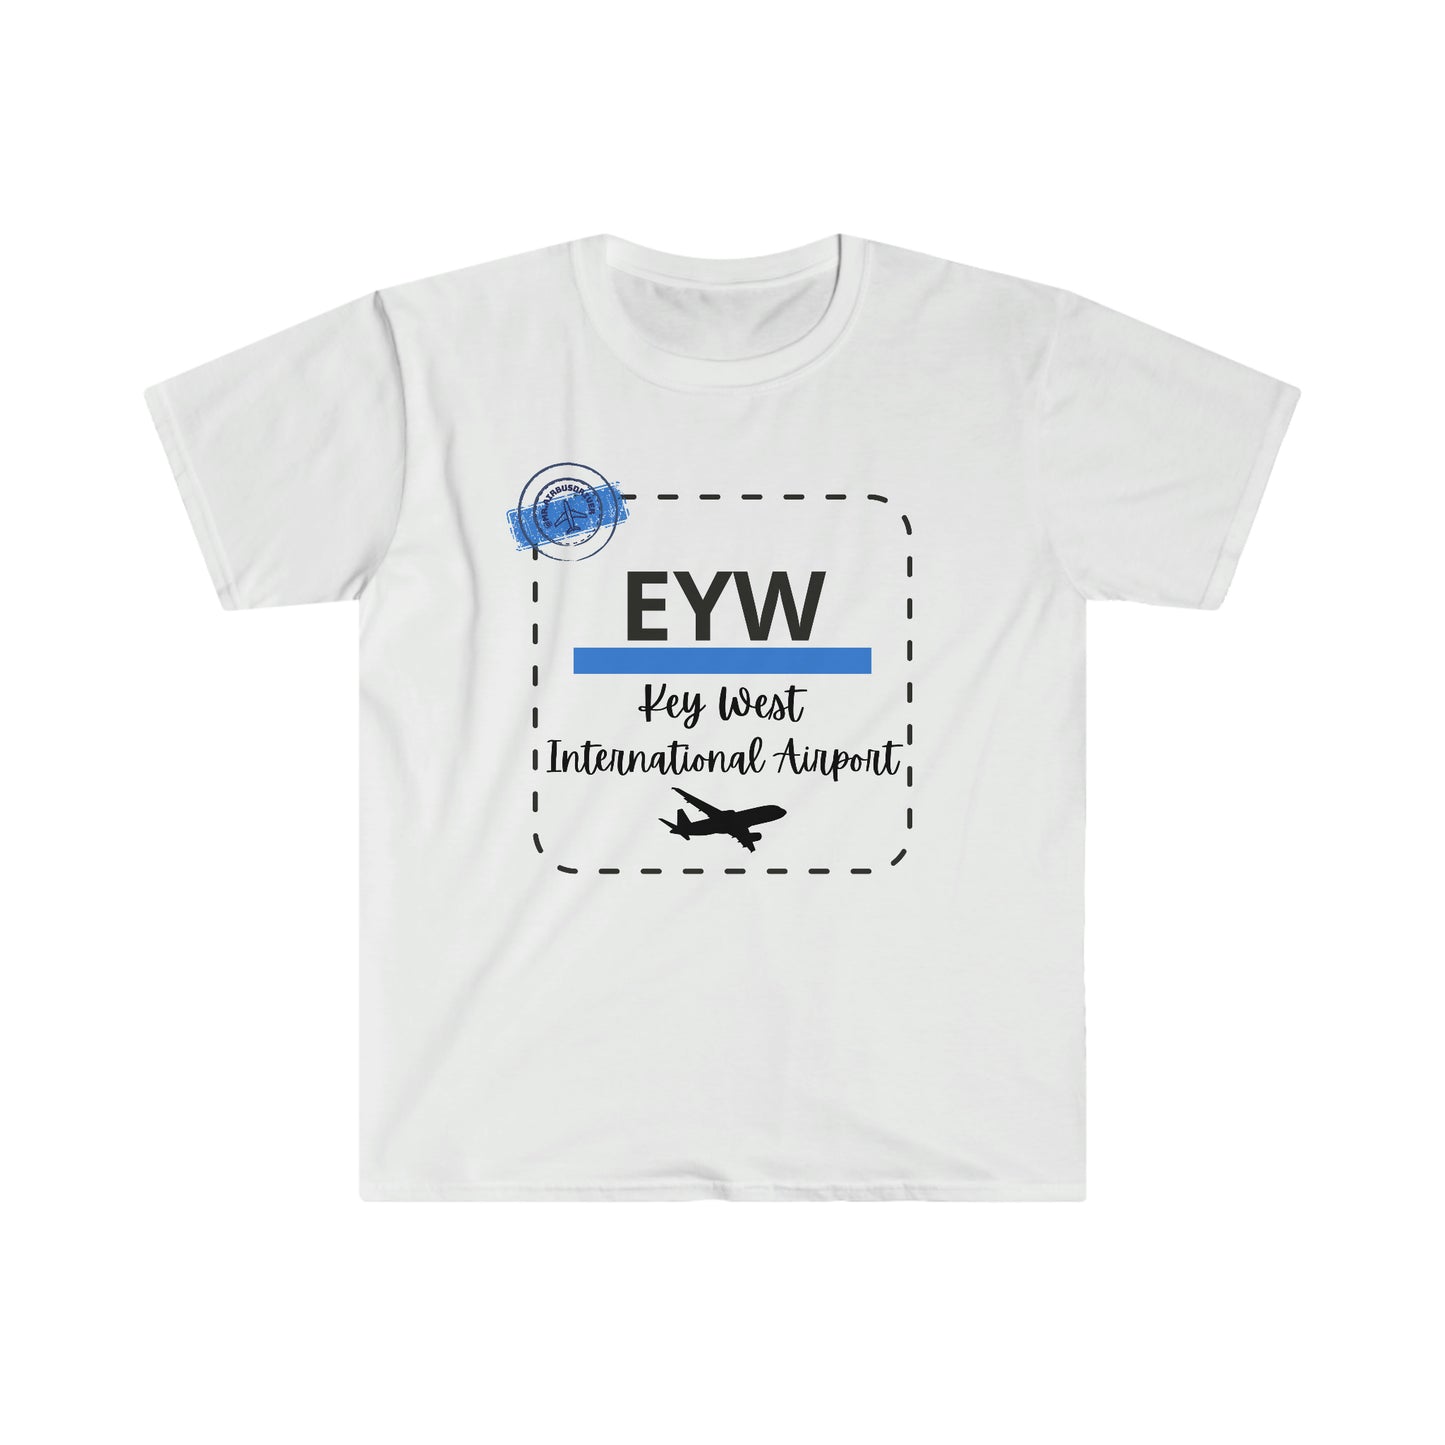 Key West Airport T-shirt